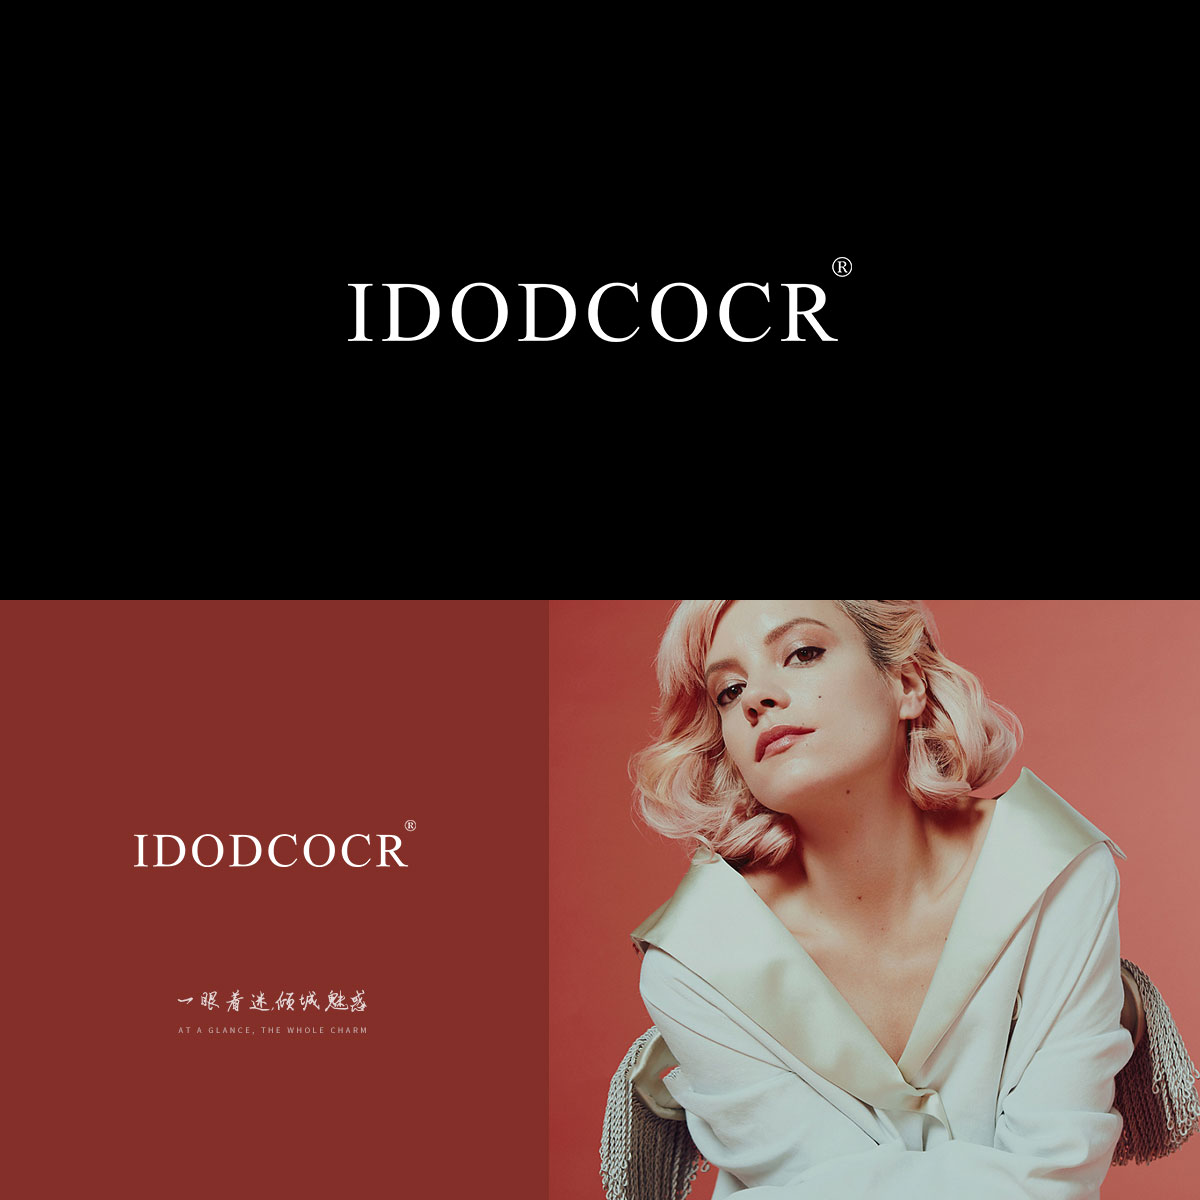 IDODCOCR